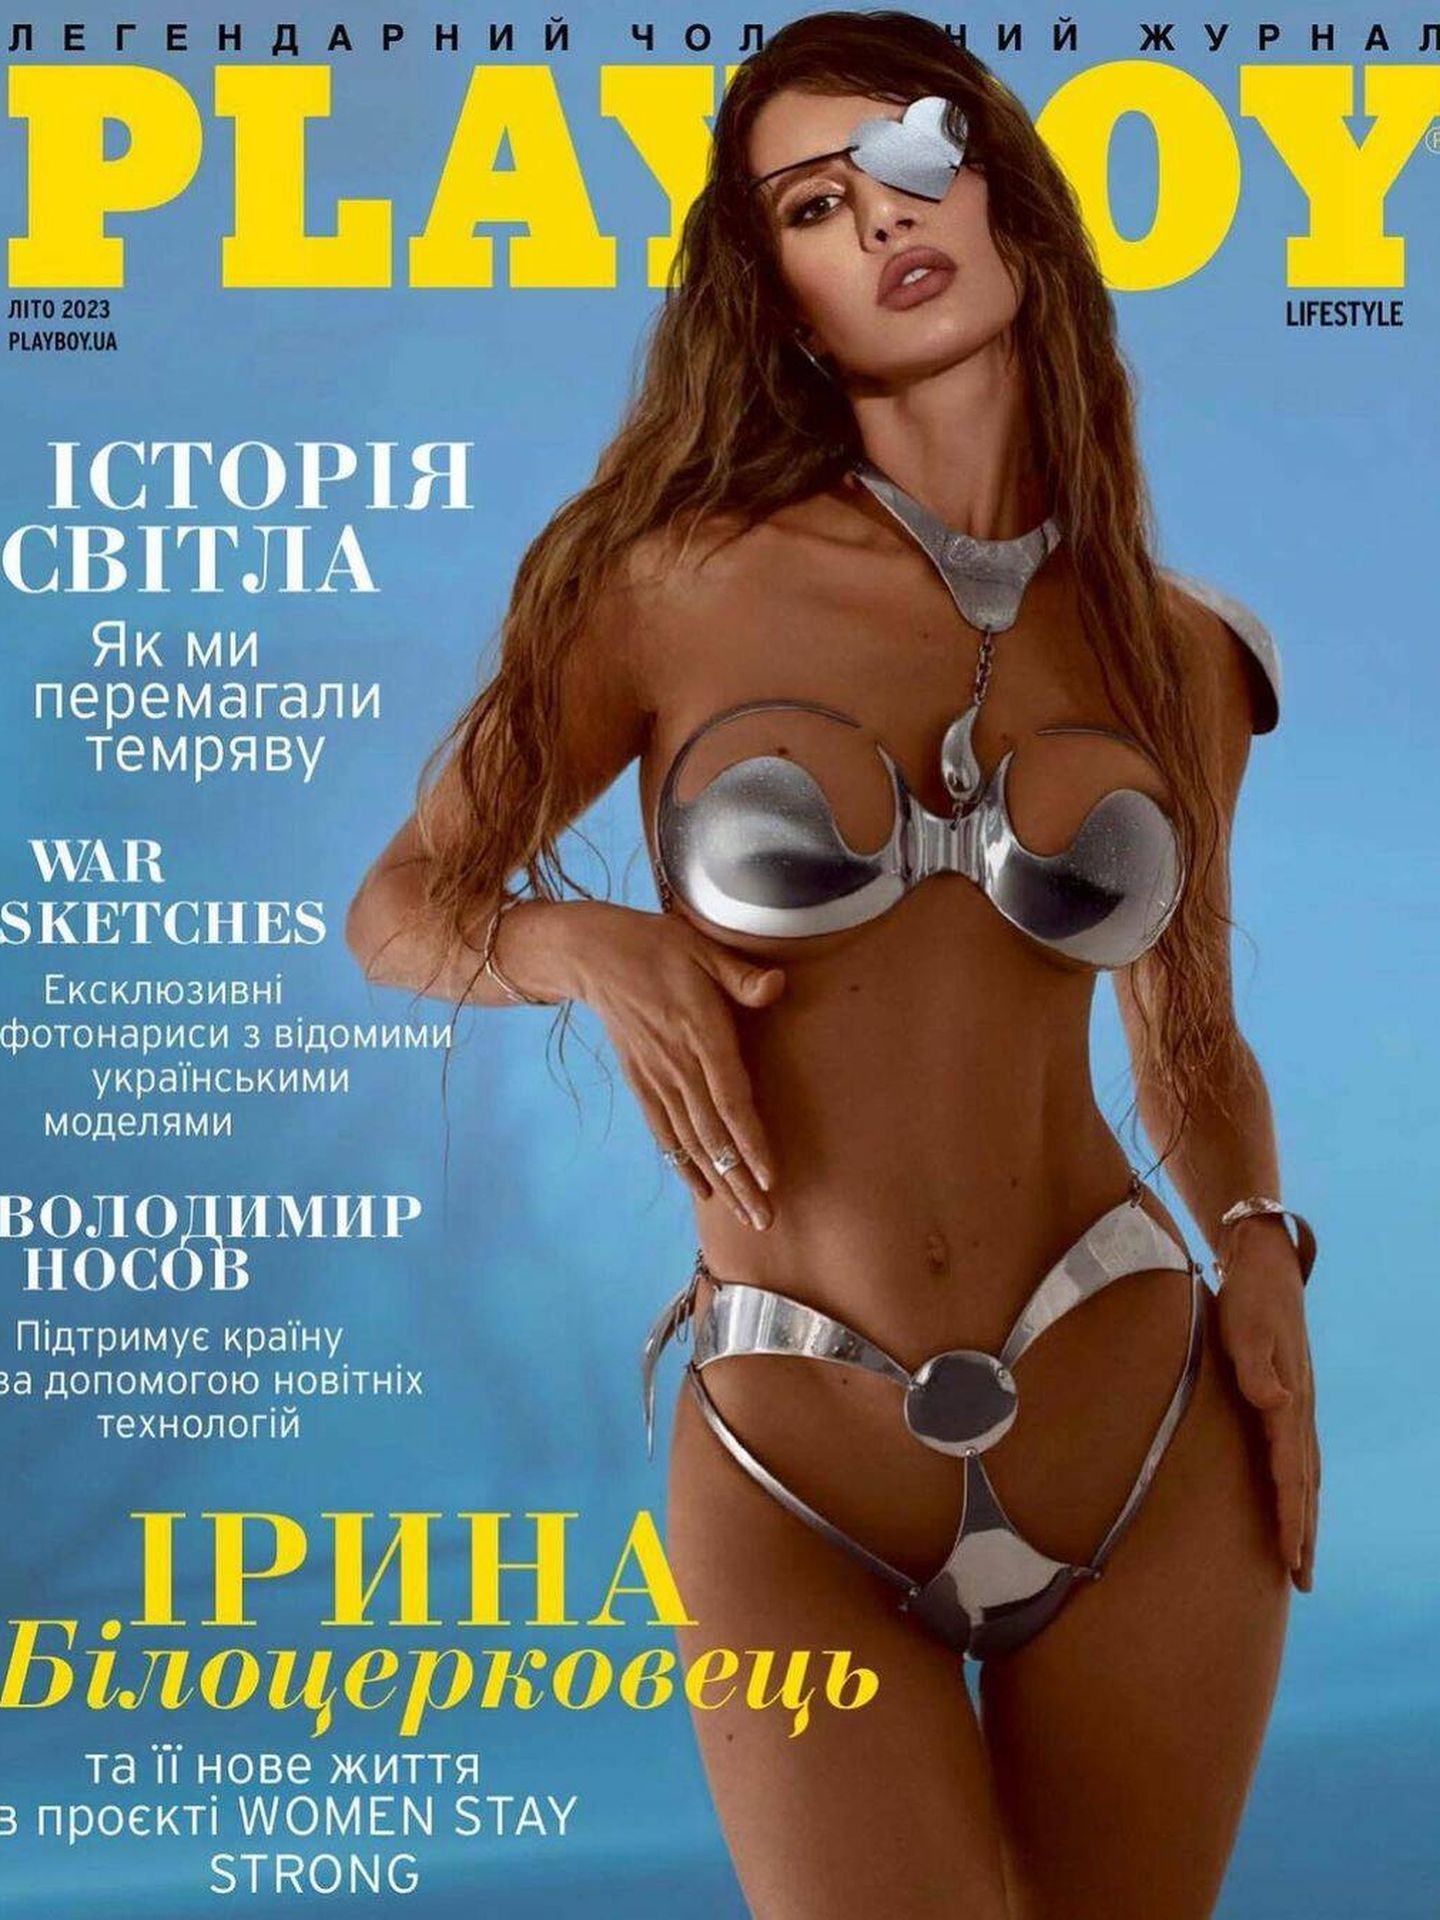 Portada de la revista, protagonizada por Iryna.